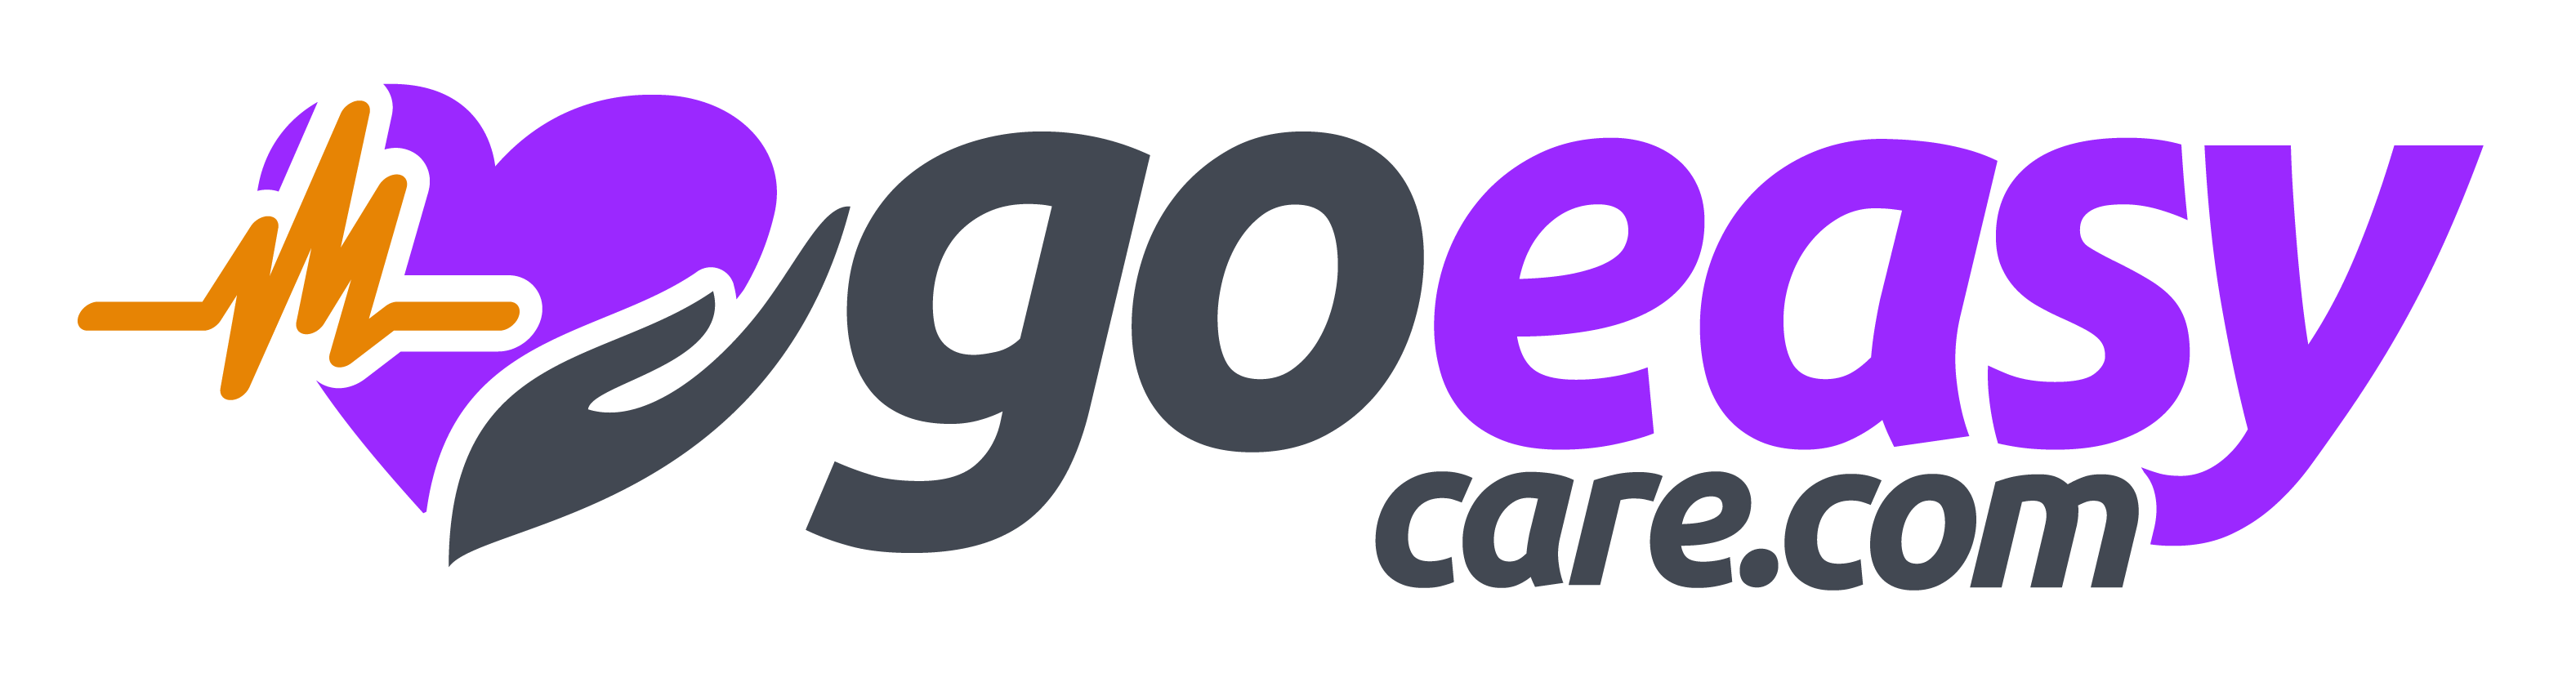 GoEasyCare - Workforce Management Platform